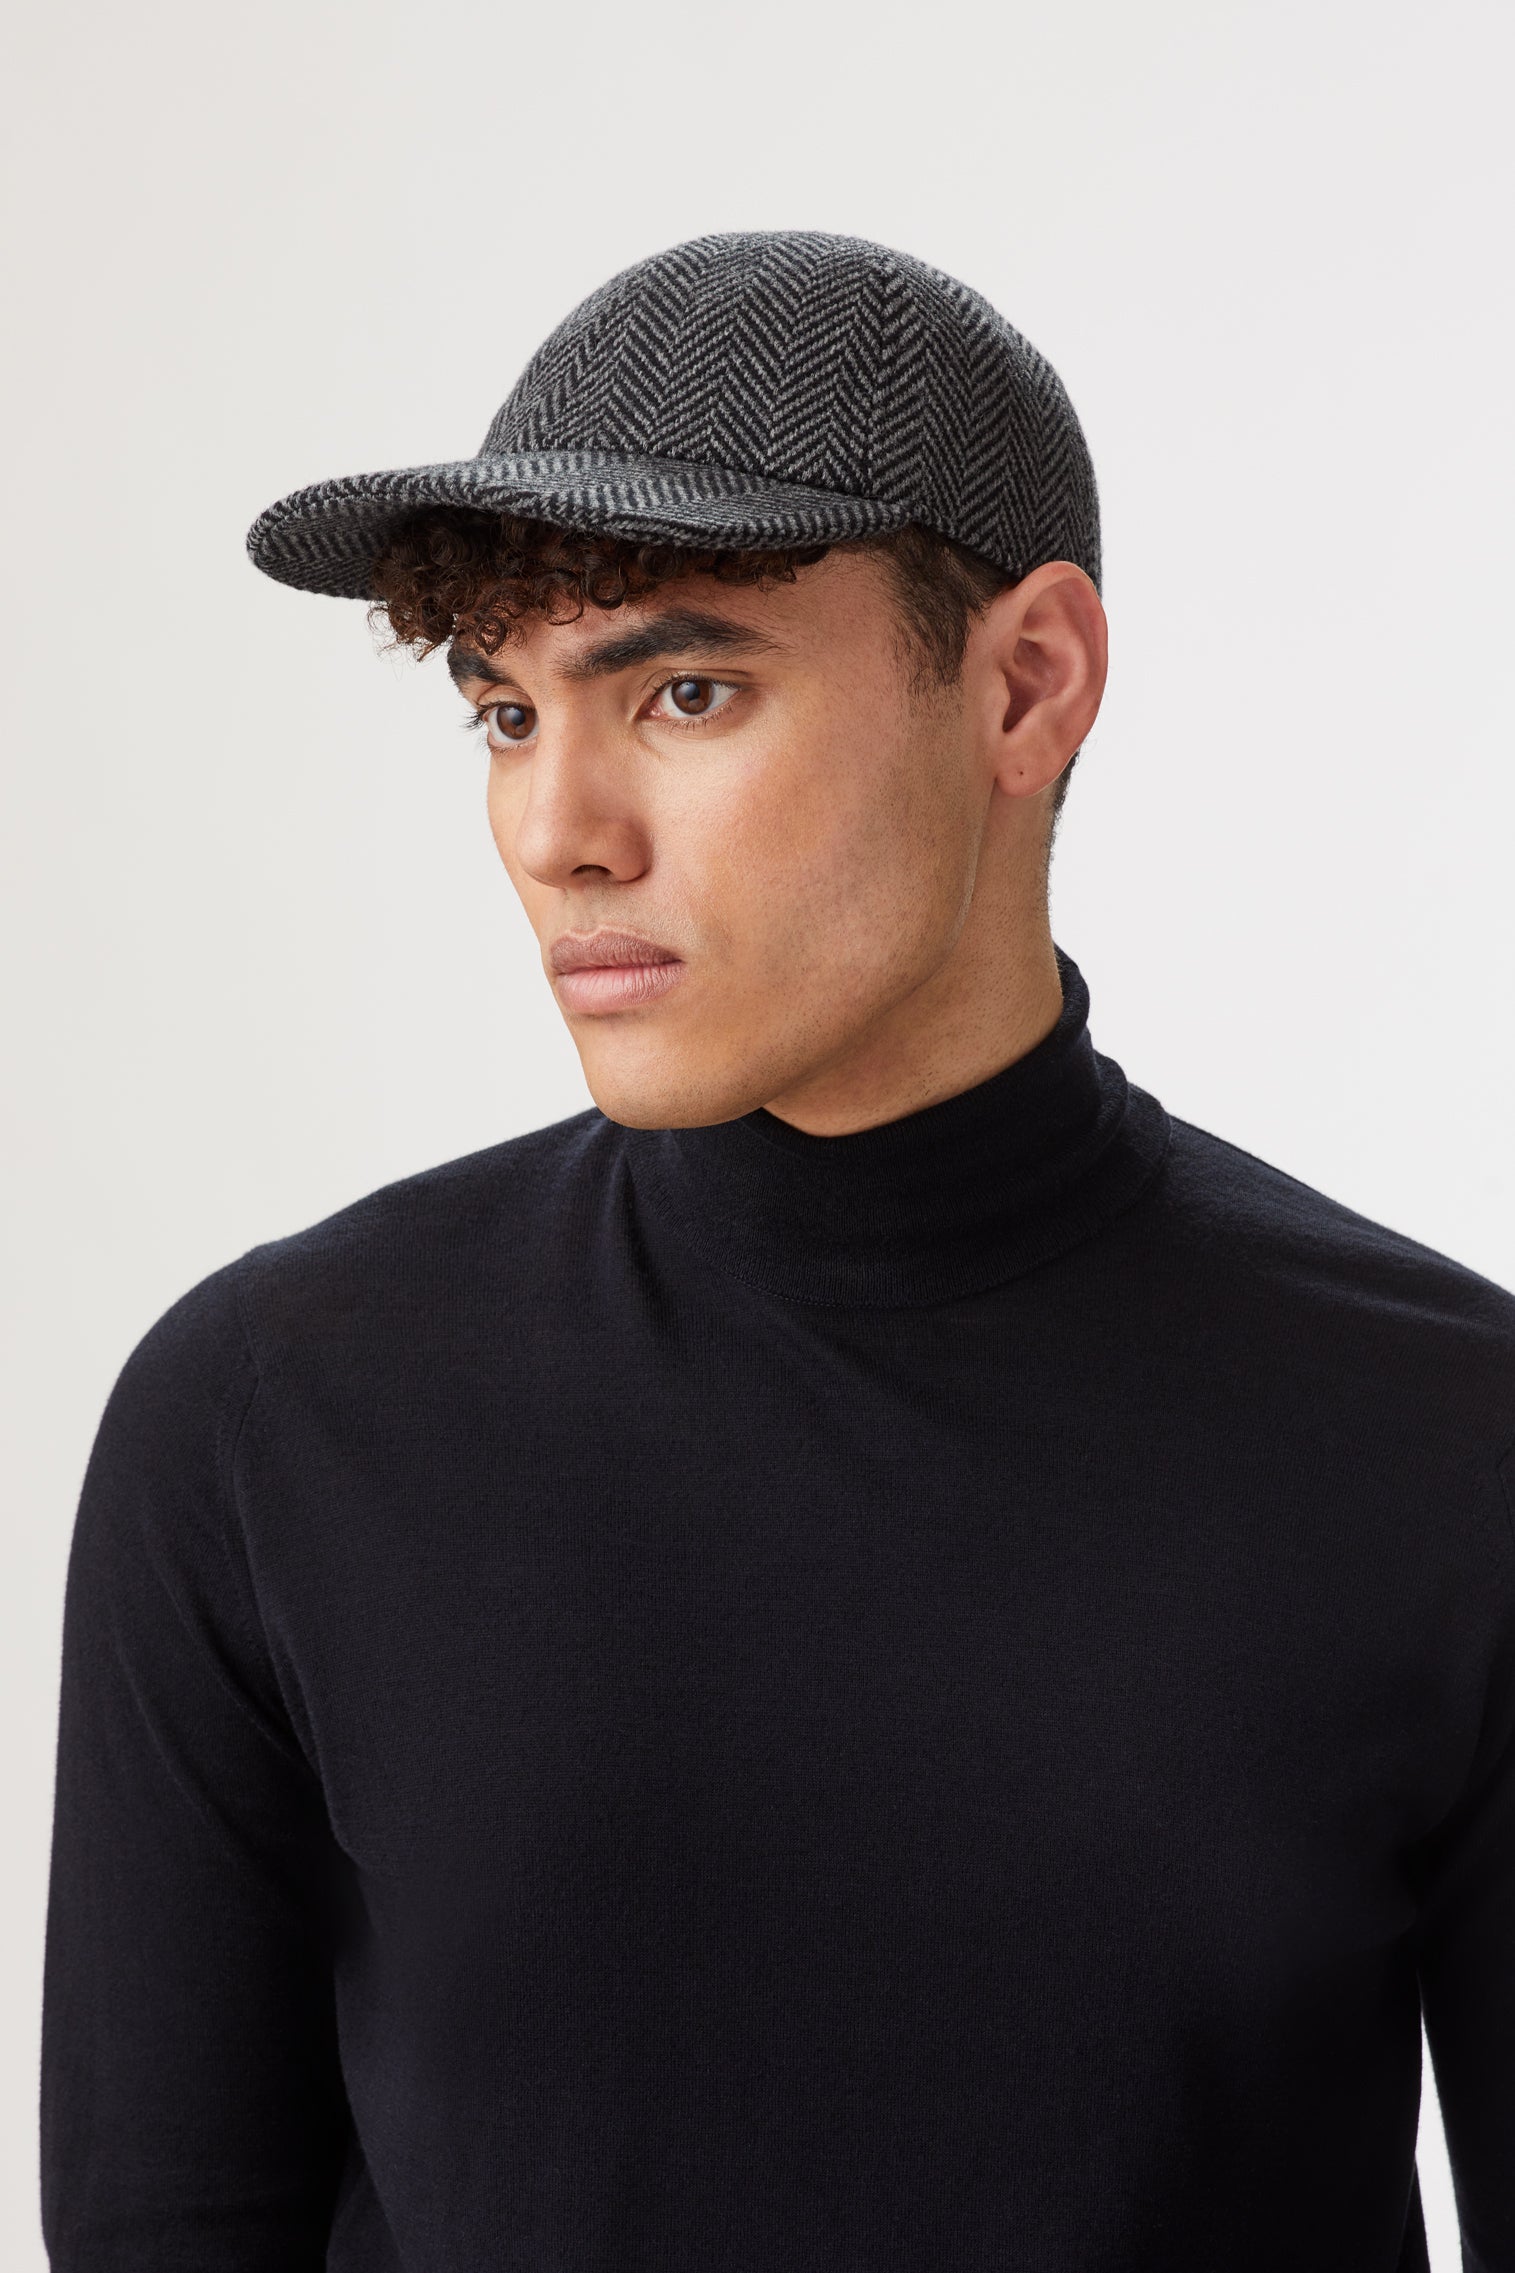 Escorial Wool Baseball Cap - Hats for Heart-shaped Face Shapes - Lock & Co. Hatters London UK